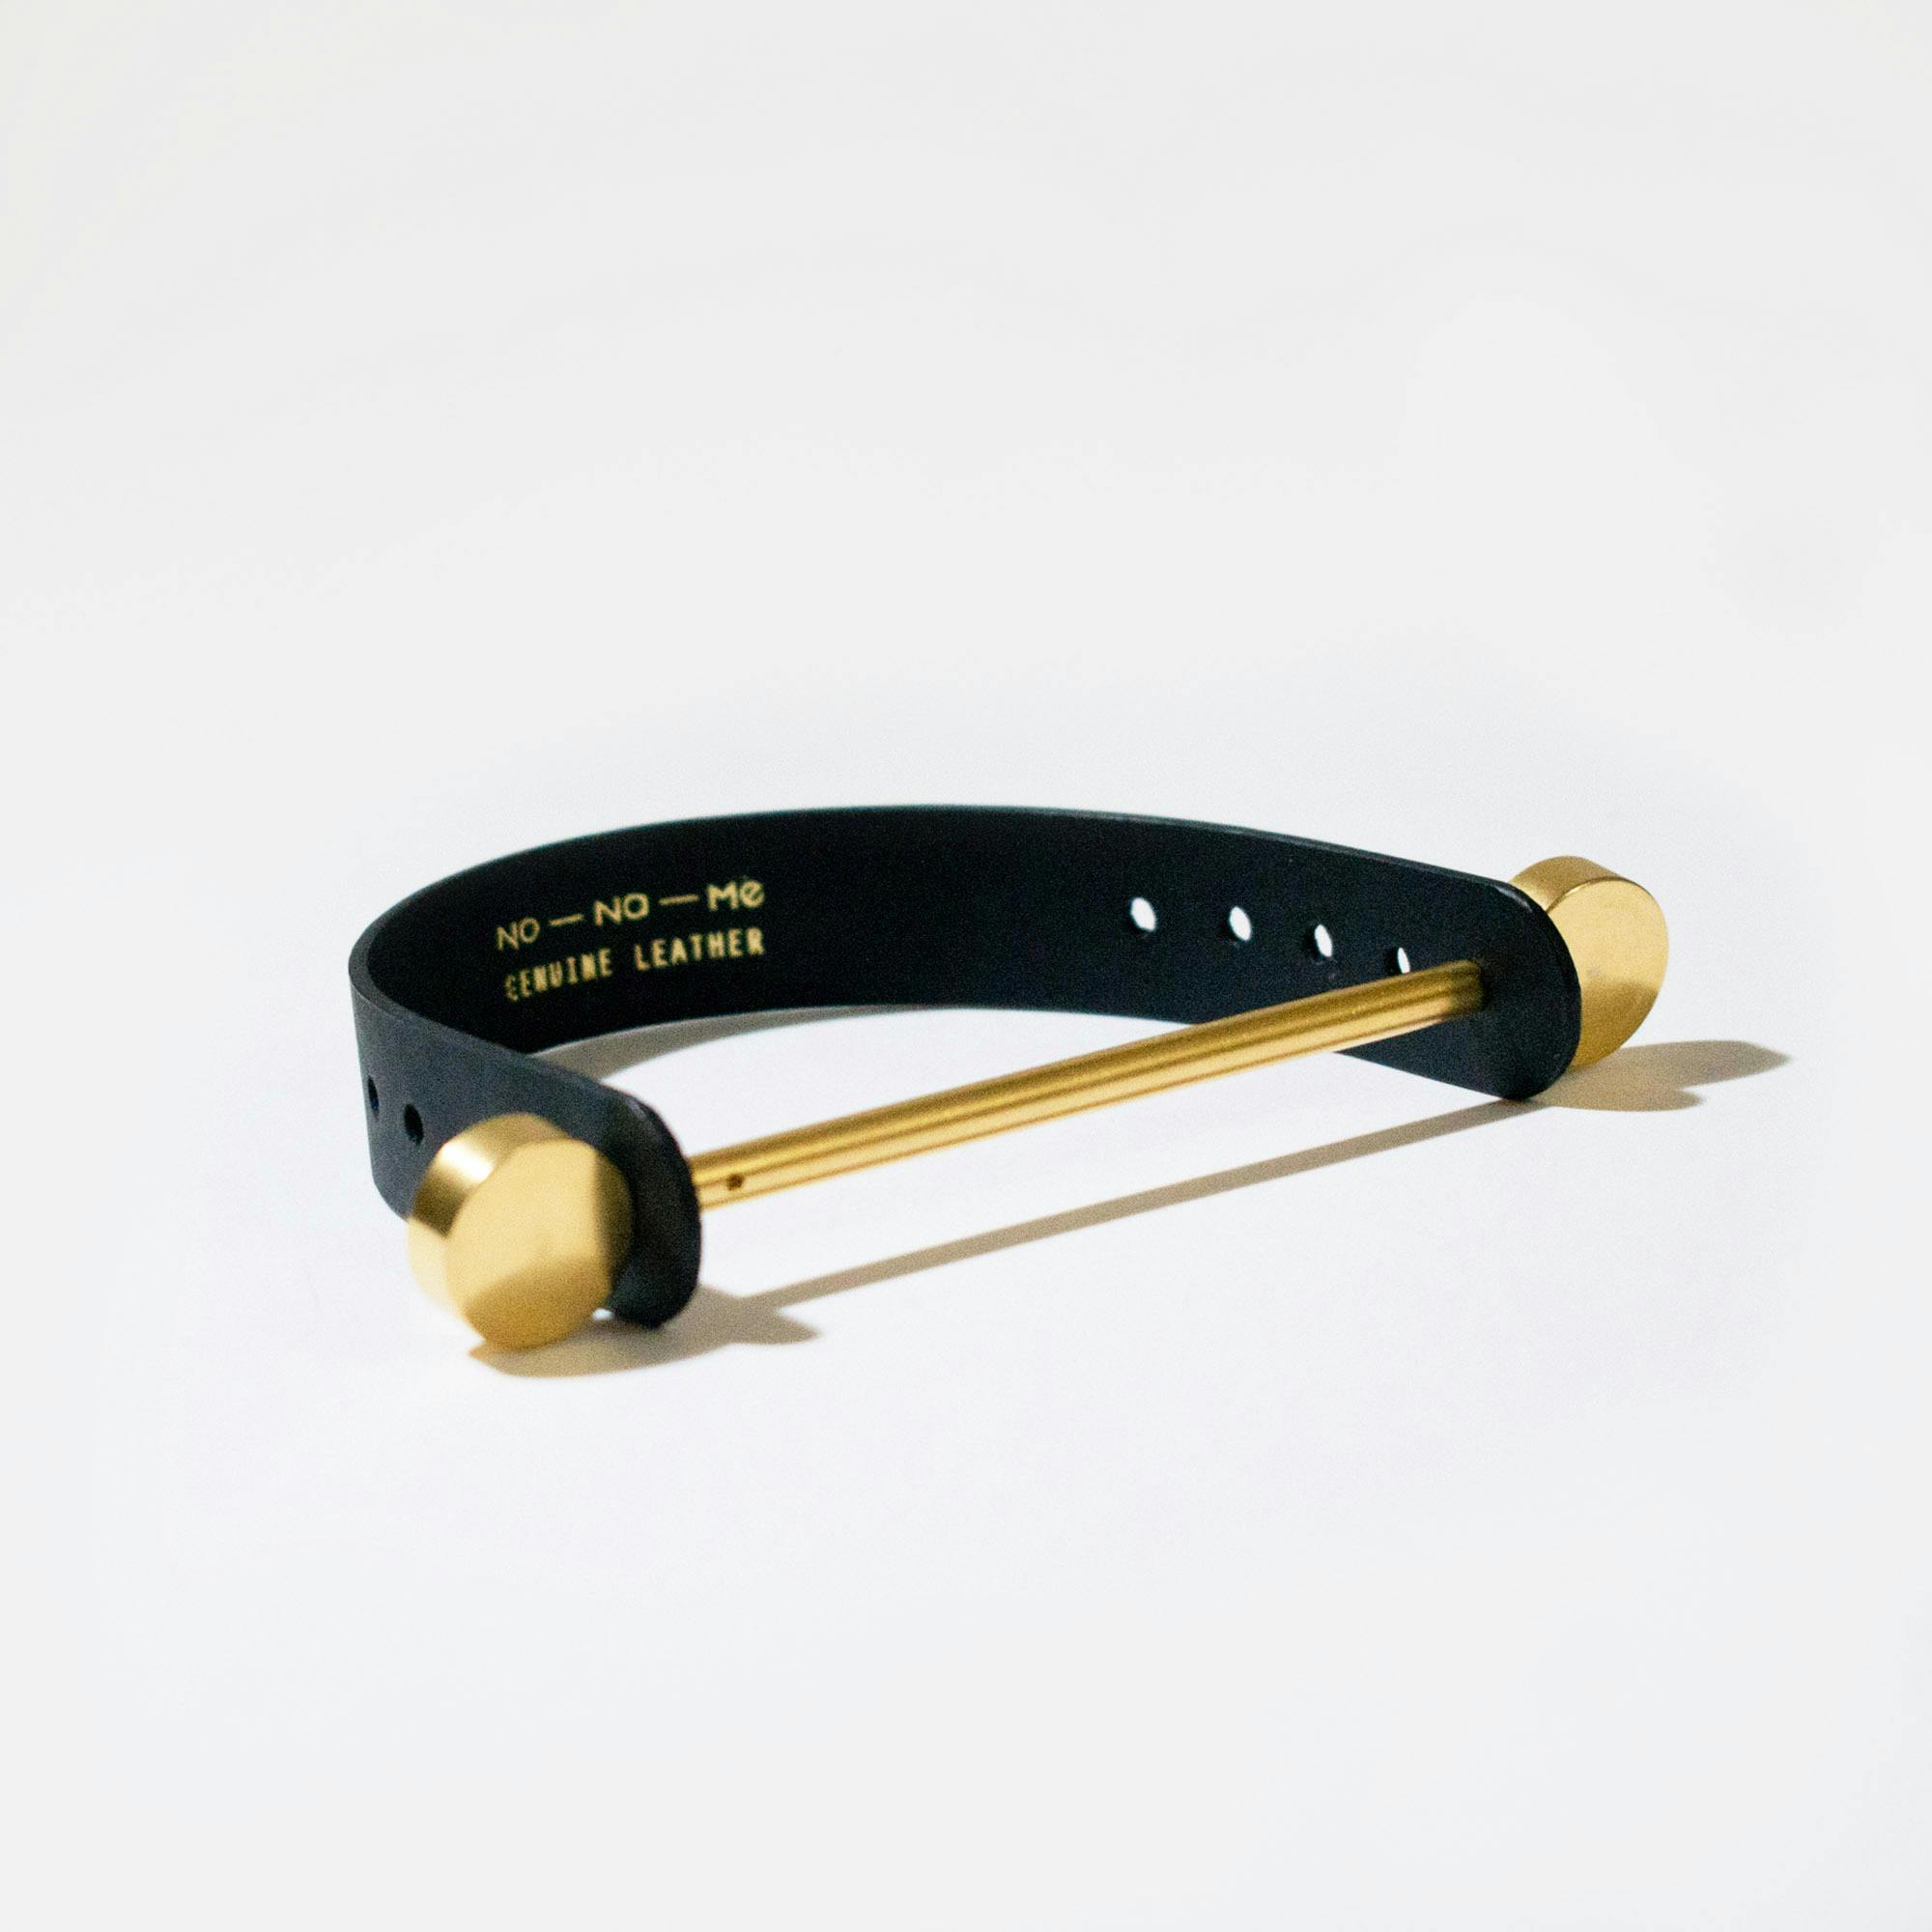 Curb Wrist Band, a product by NO NA MÉ